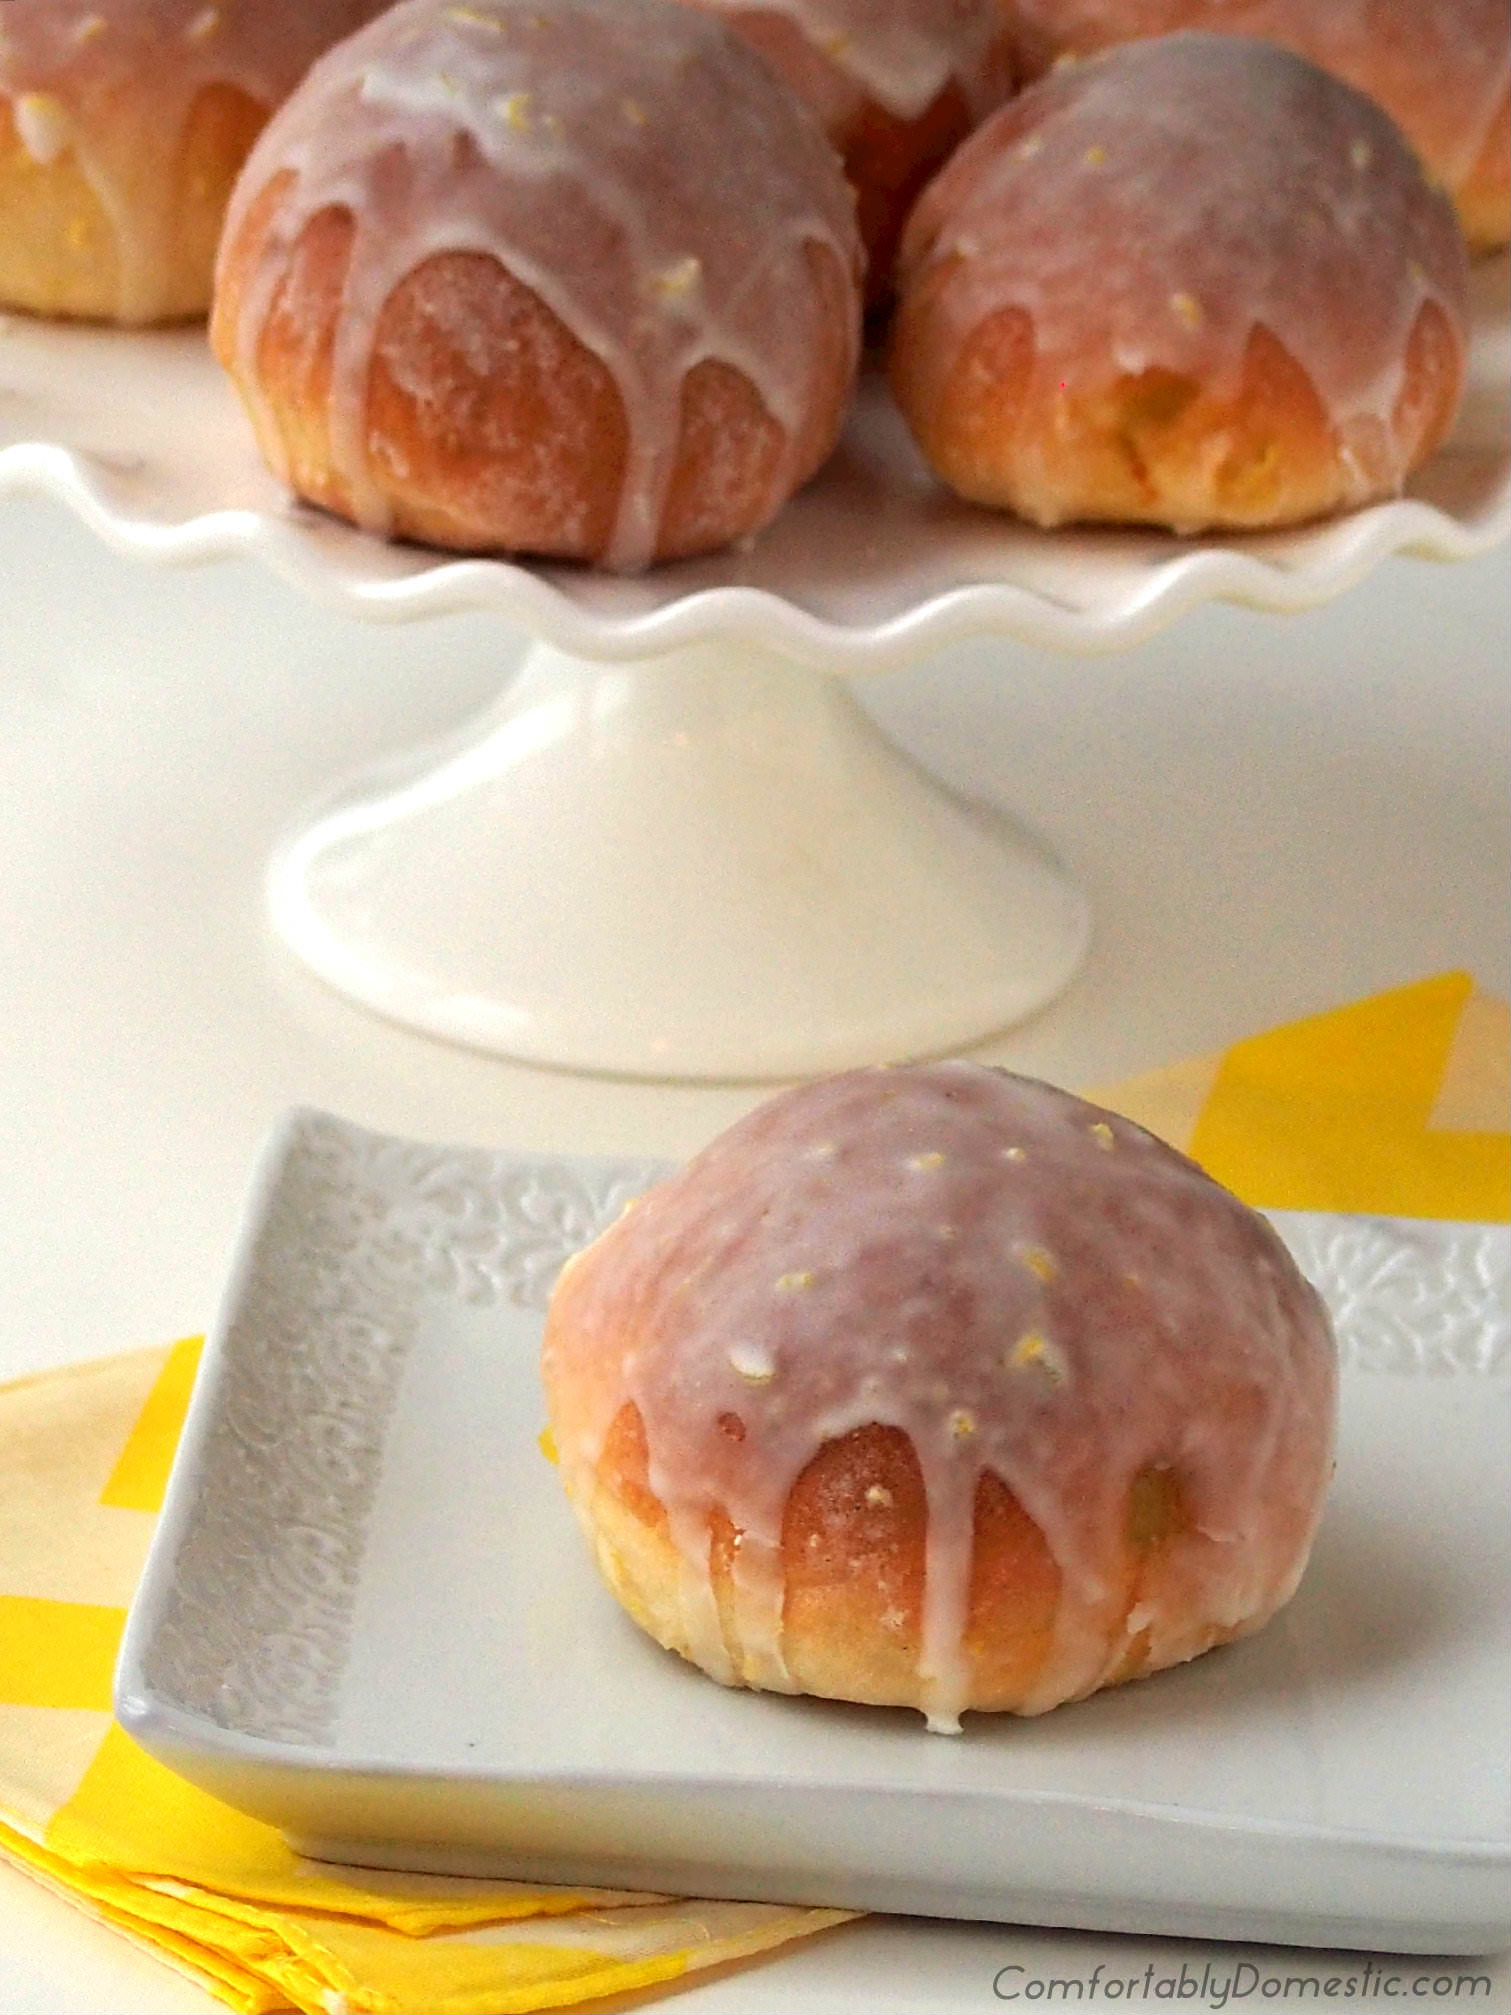 Baked Lemon Custard Doughnuts {Lemon Paczki} are a lighter version of traditional paczki. | ComfortablyDomestic.com